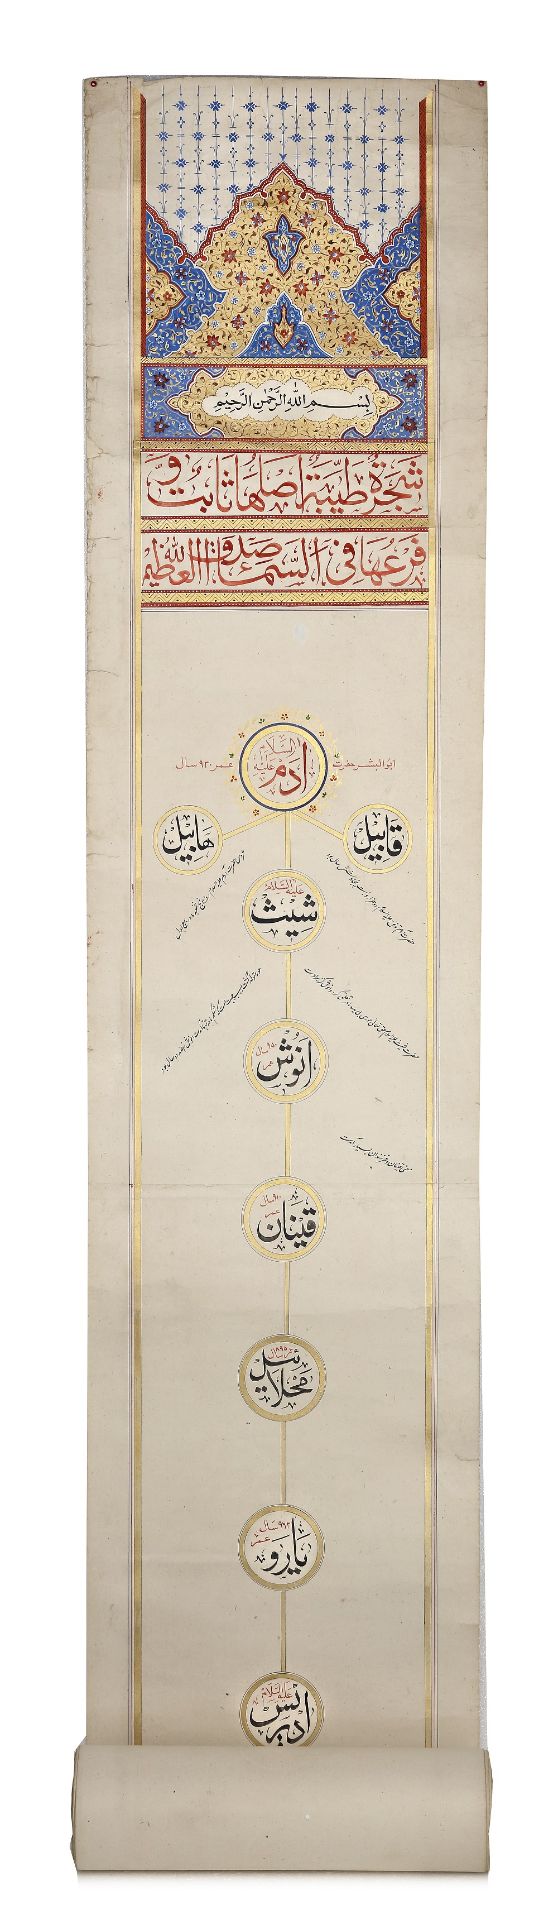 A LARGE OTTOMAN GENEALOGICAL SCROLL (SILSILENAME), TURKEY, 18TH CENTURY - Image 3 of 9